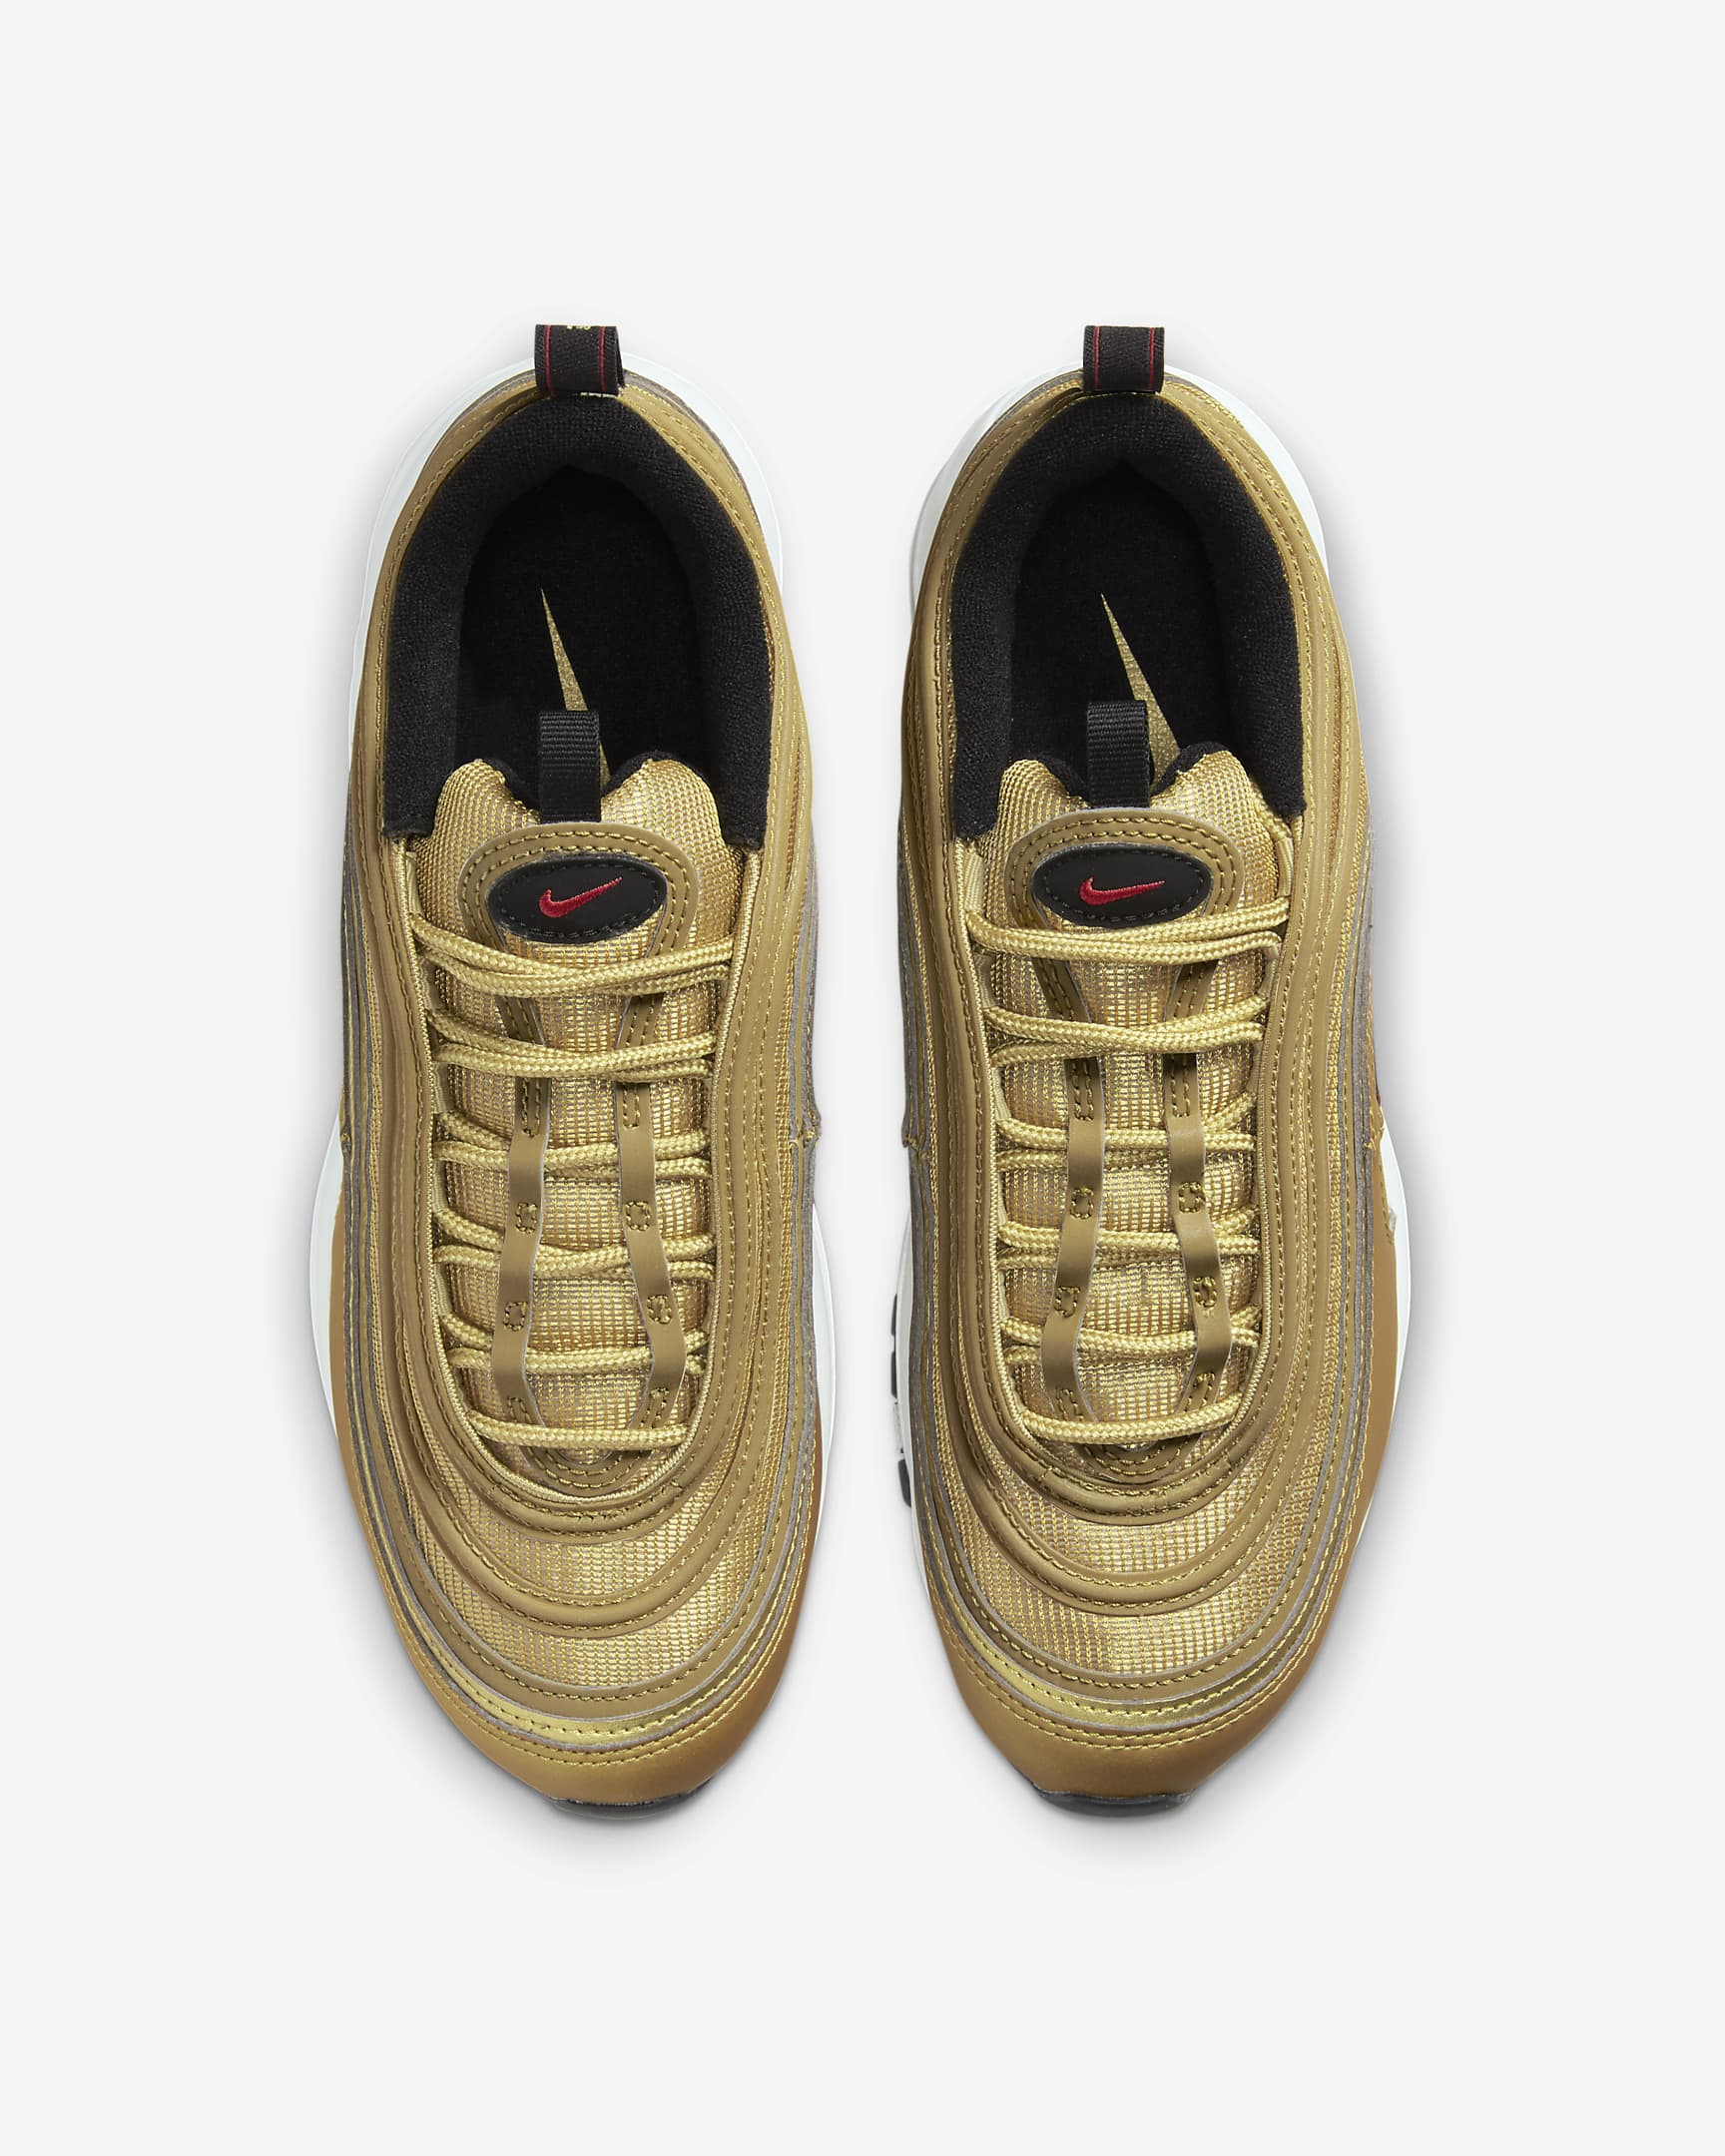 Nike Air Max 97 Women's Shoes - Metallic Gold/Black/White/Varsity Red